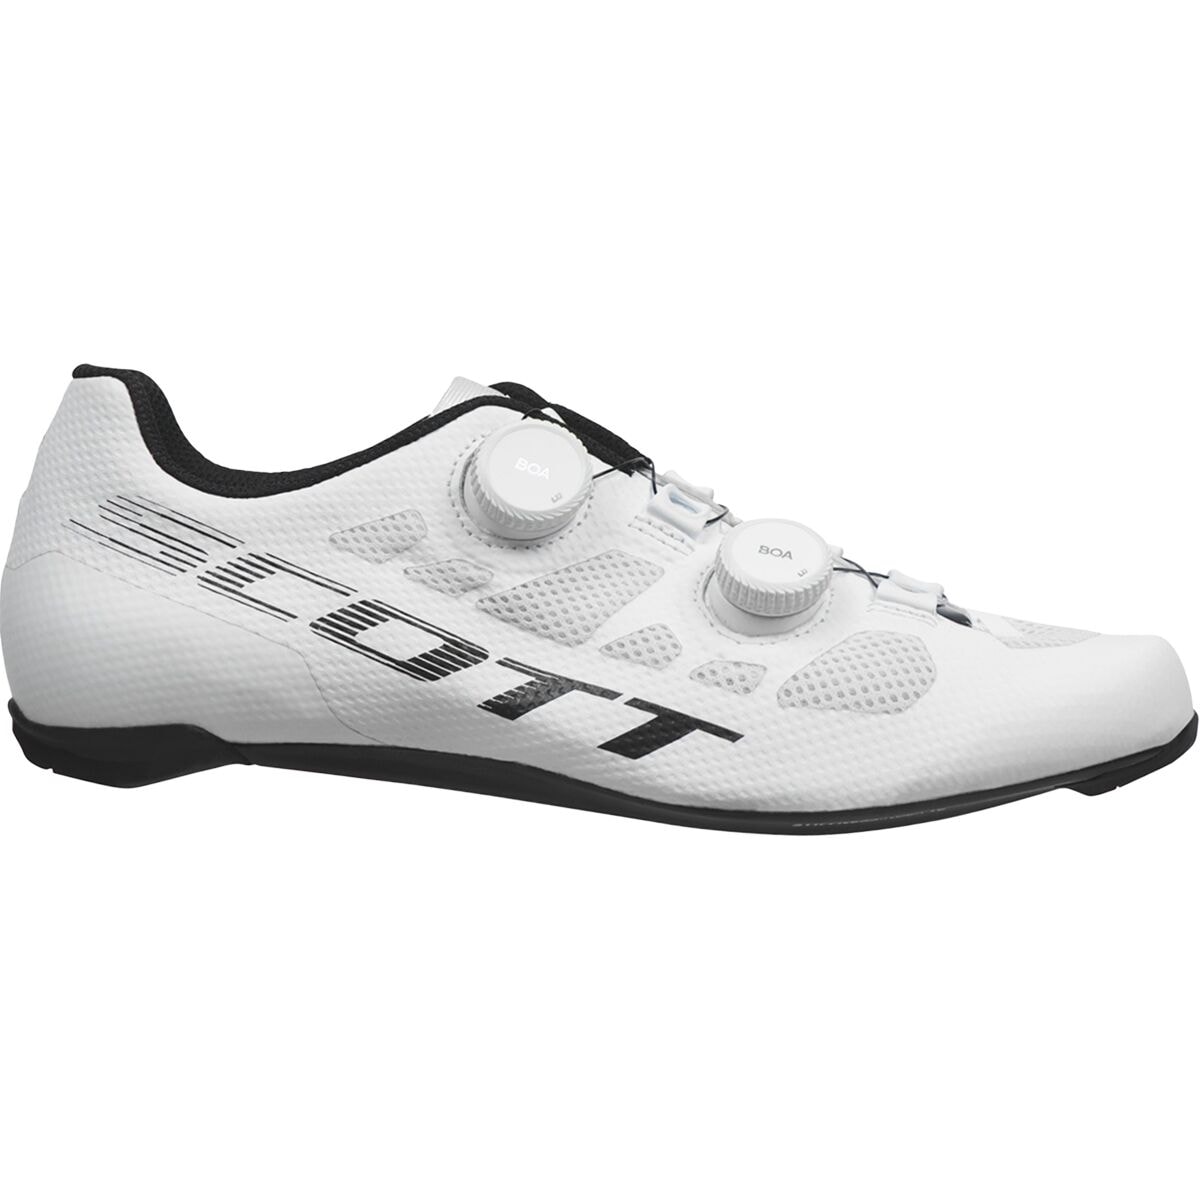 Scott Road RC Evo Cycling Shoe - Men's White/Black, 43.0 -  2887961035430